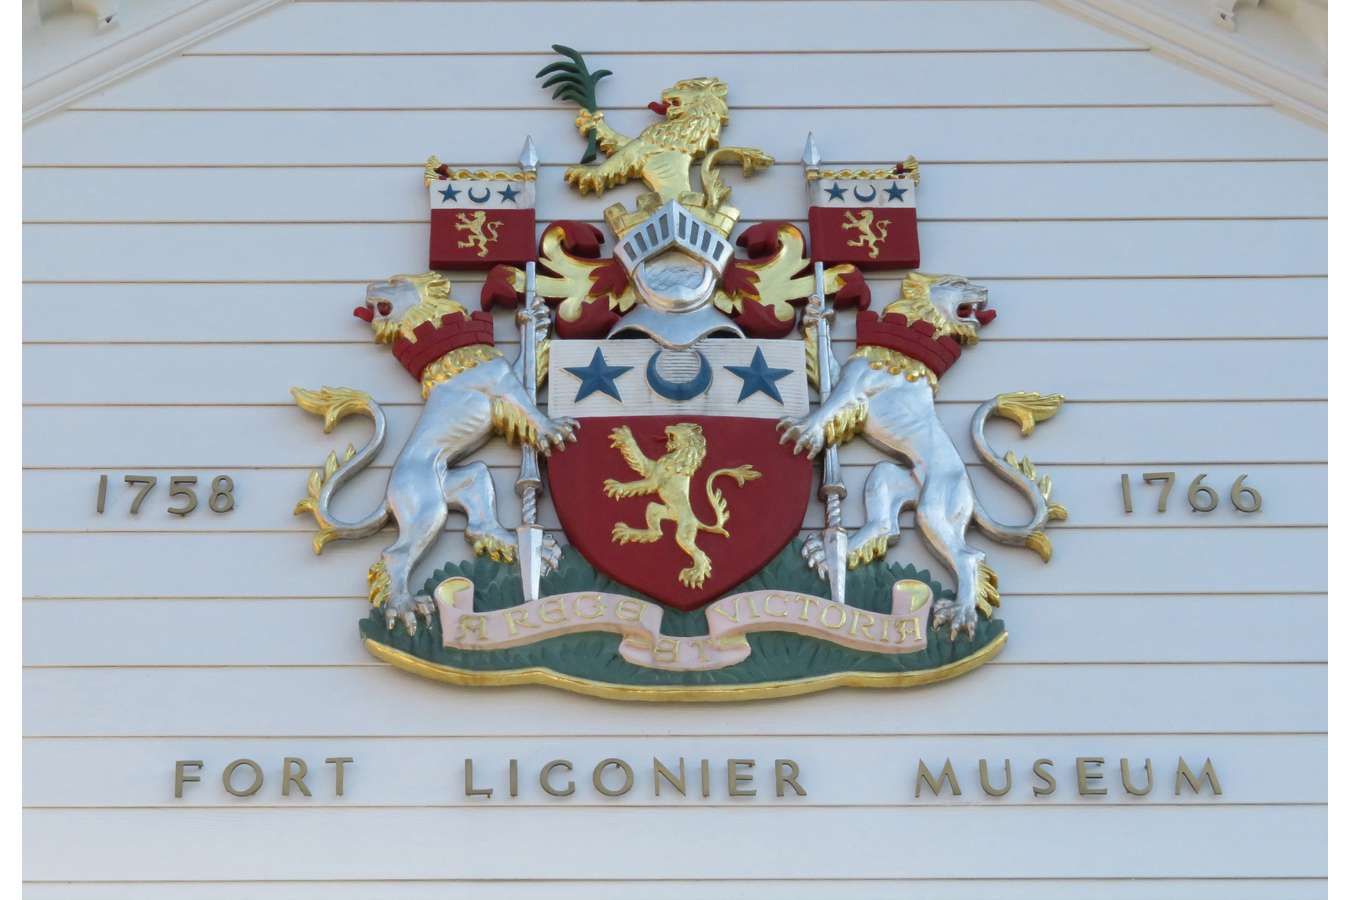 2017 11 08 15.42.49 : New education center and interpretive exhibits now make Fort Ligonier a year-round destination